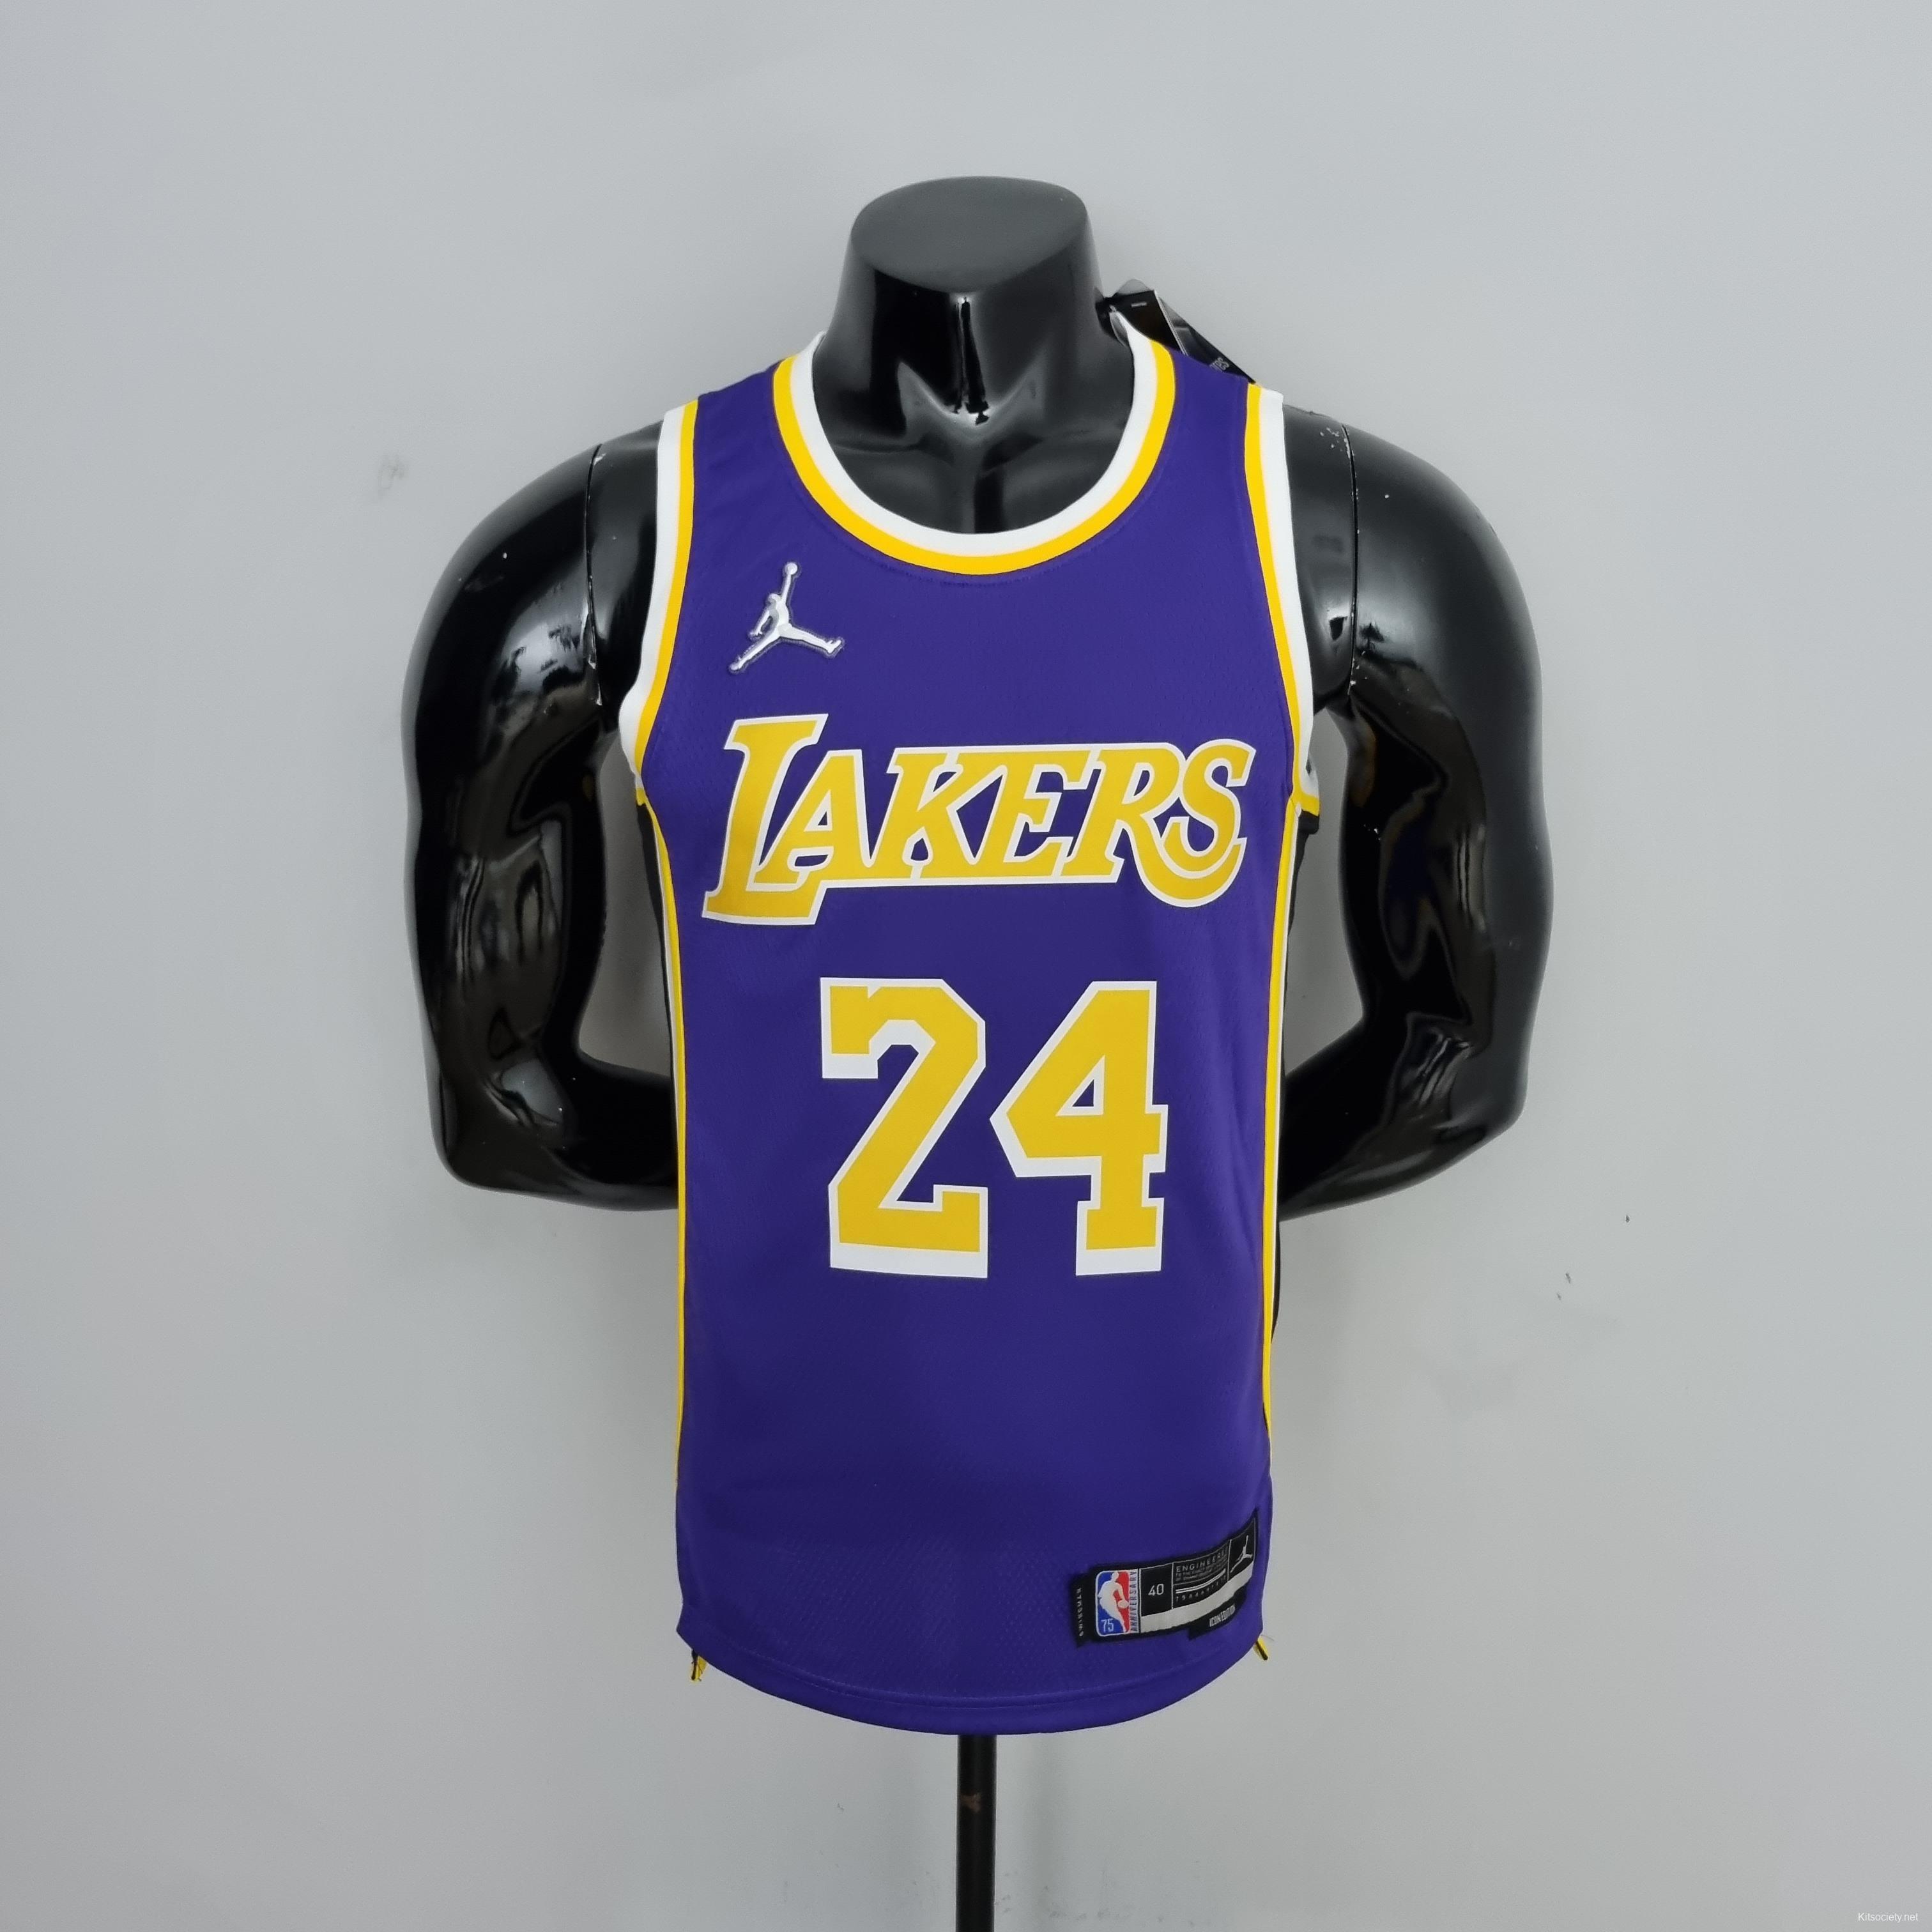 75th Anniversary BRYANT#24 Los Angeles Lakers Jordan Purple NBA